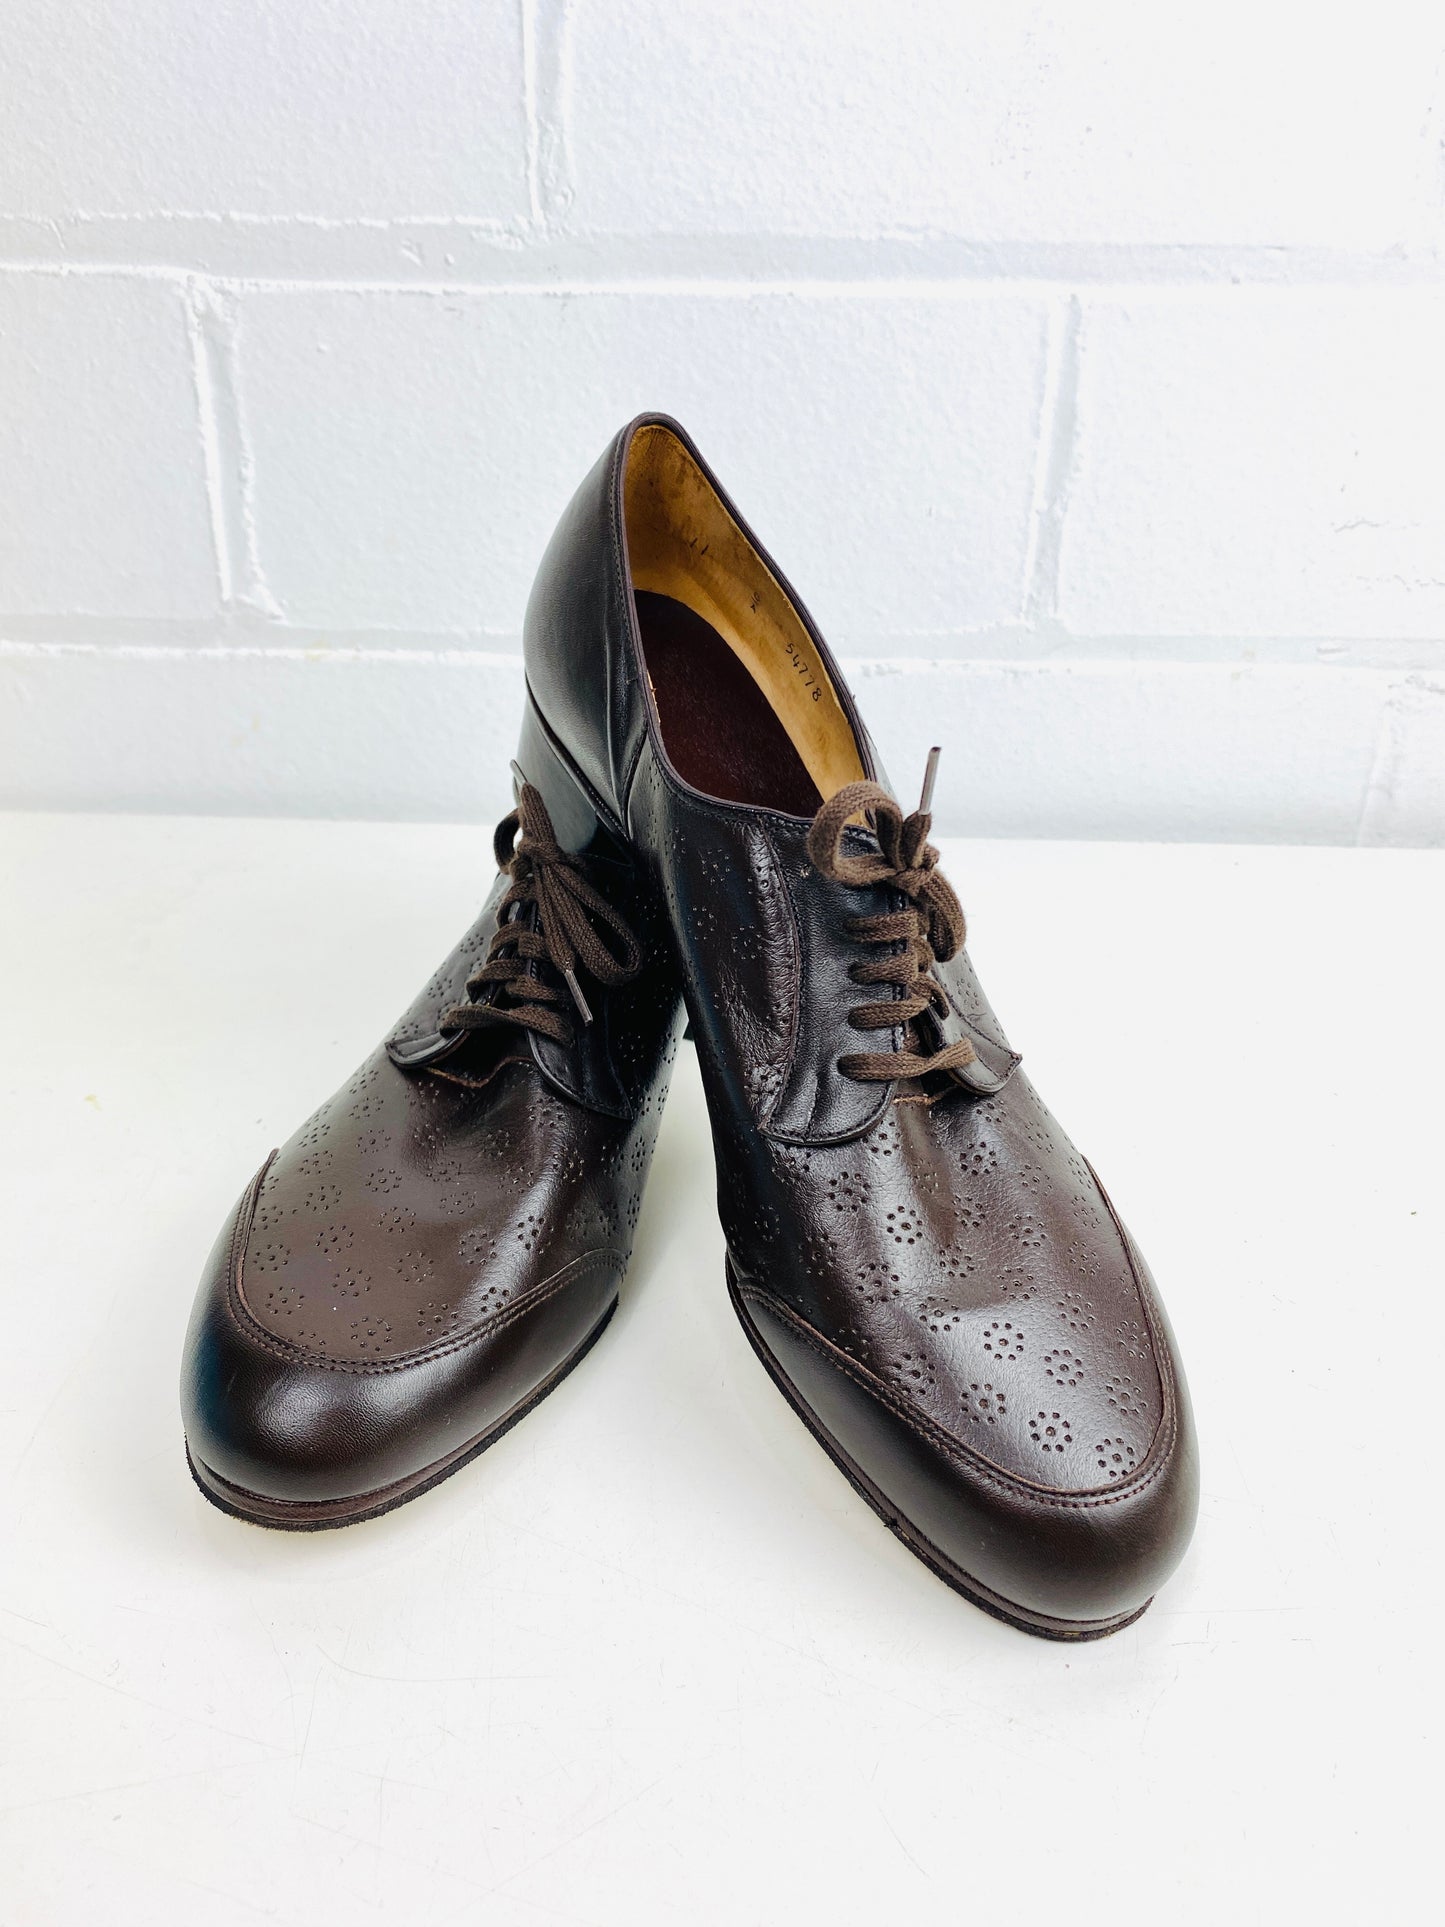 Vintage Deadstock Shoes, Women's 1980s Brown Leather Cuban Heel Oxfords, NOS, 1616